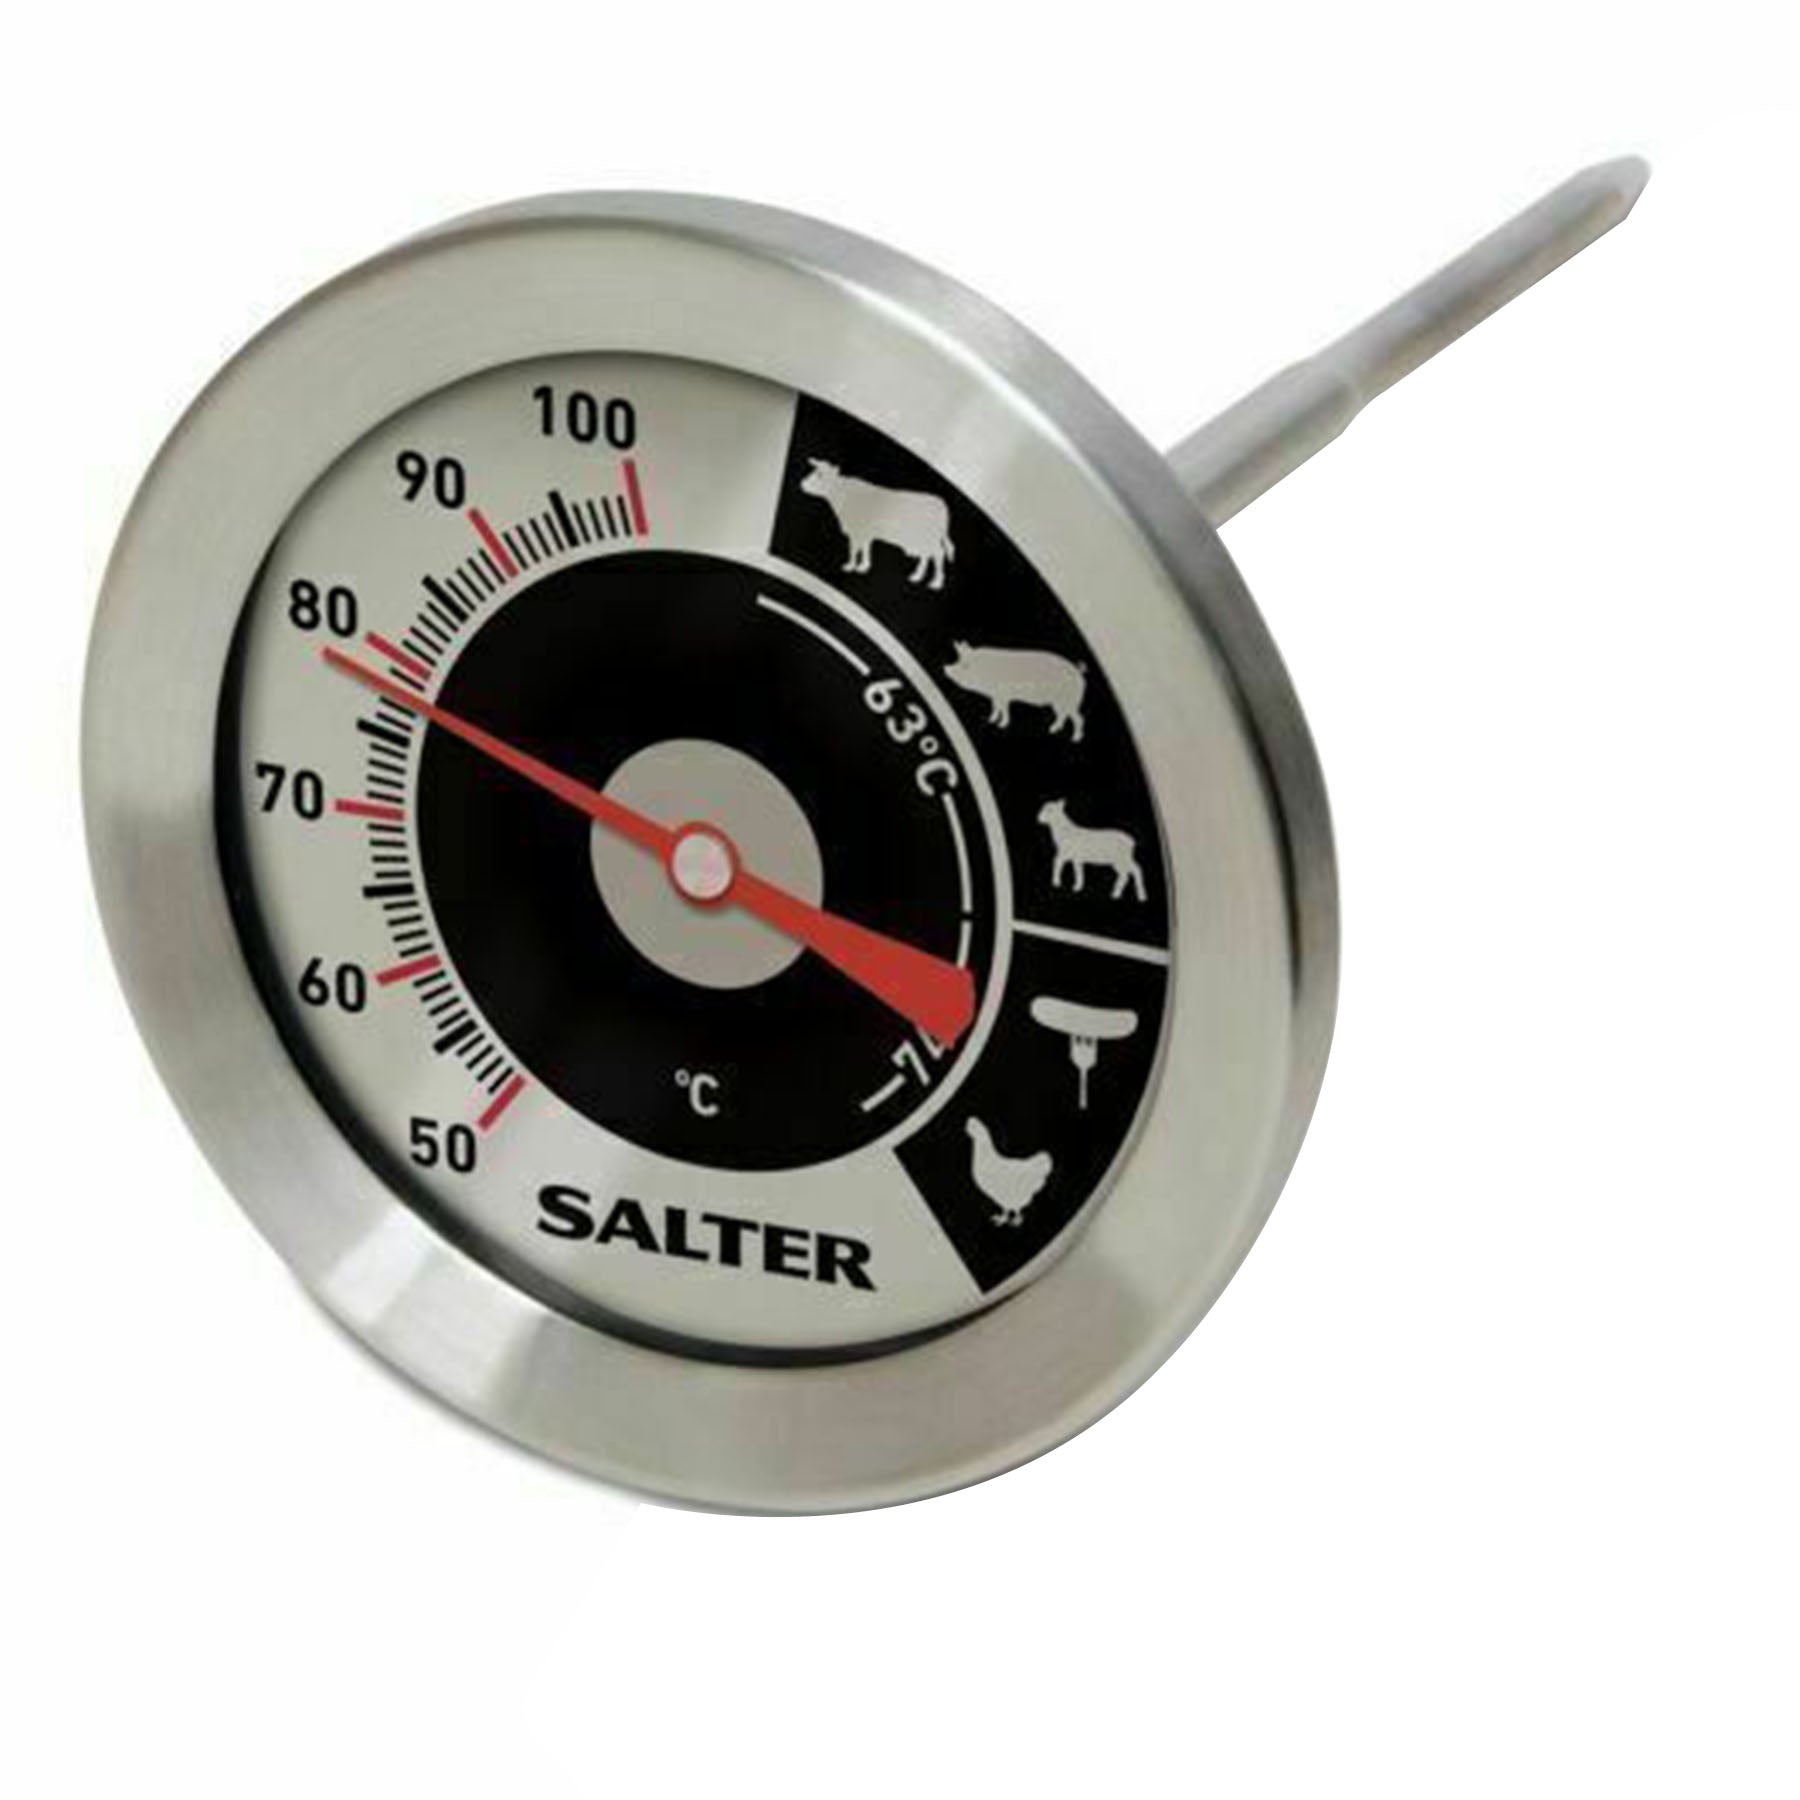 Analogue Meat ThermometerMeasurement range: 50-100C